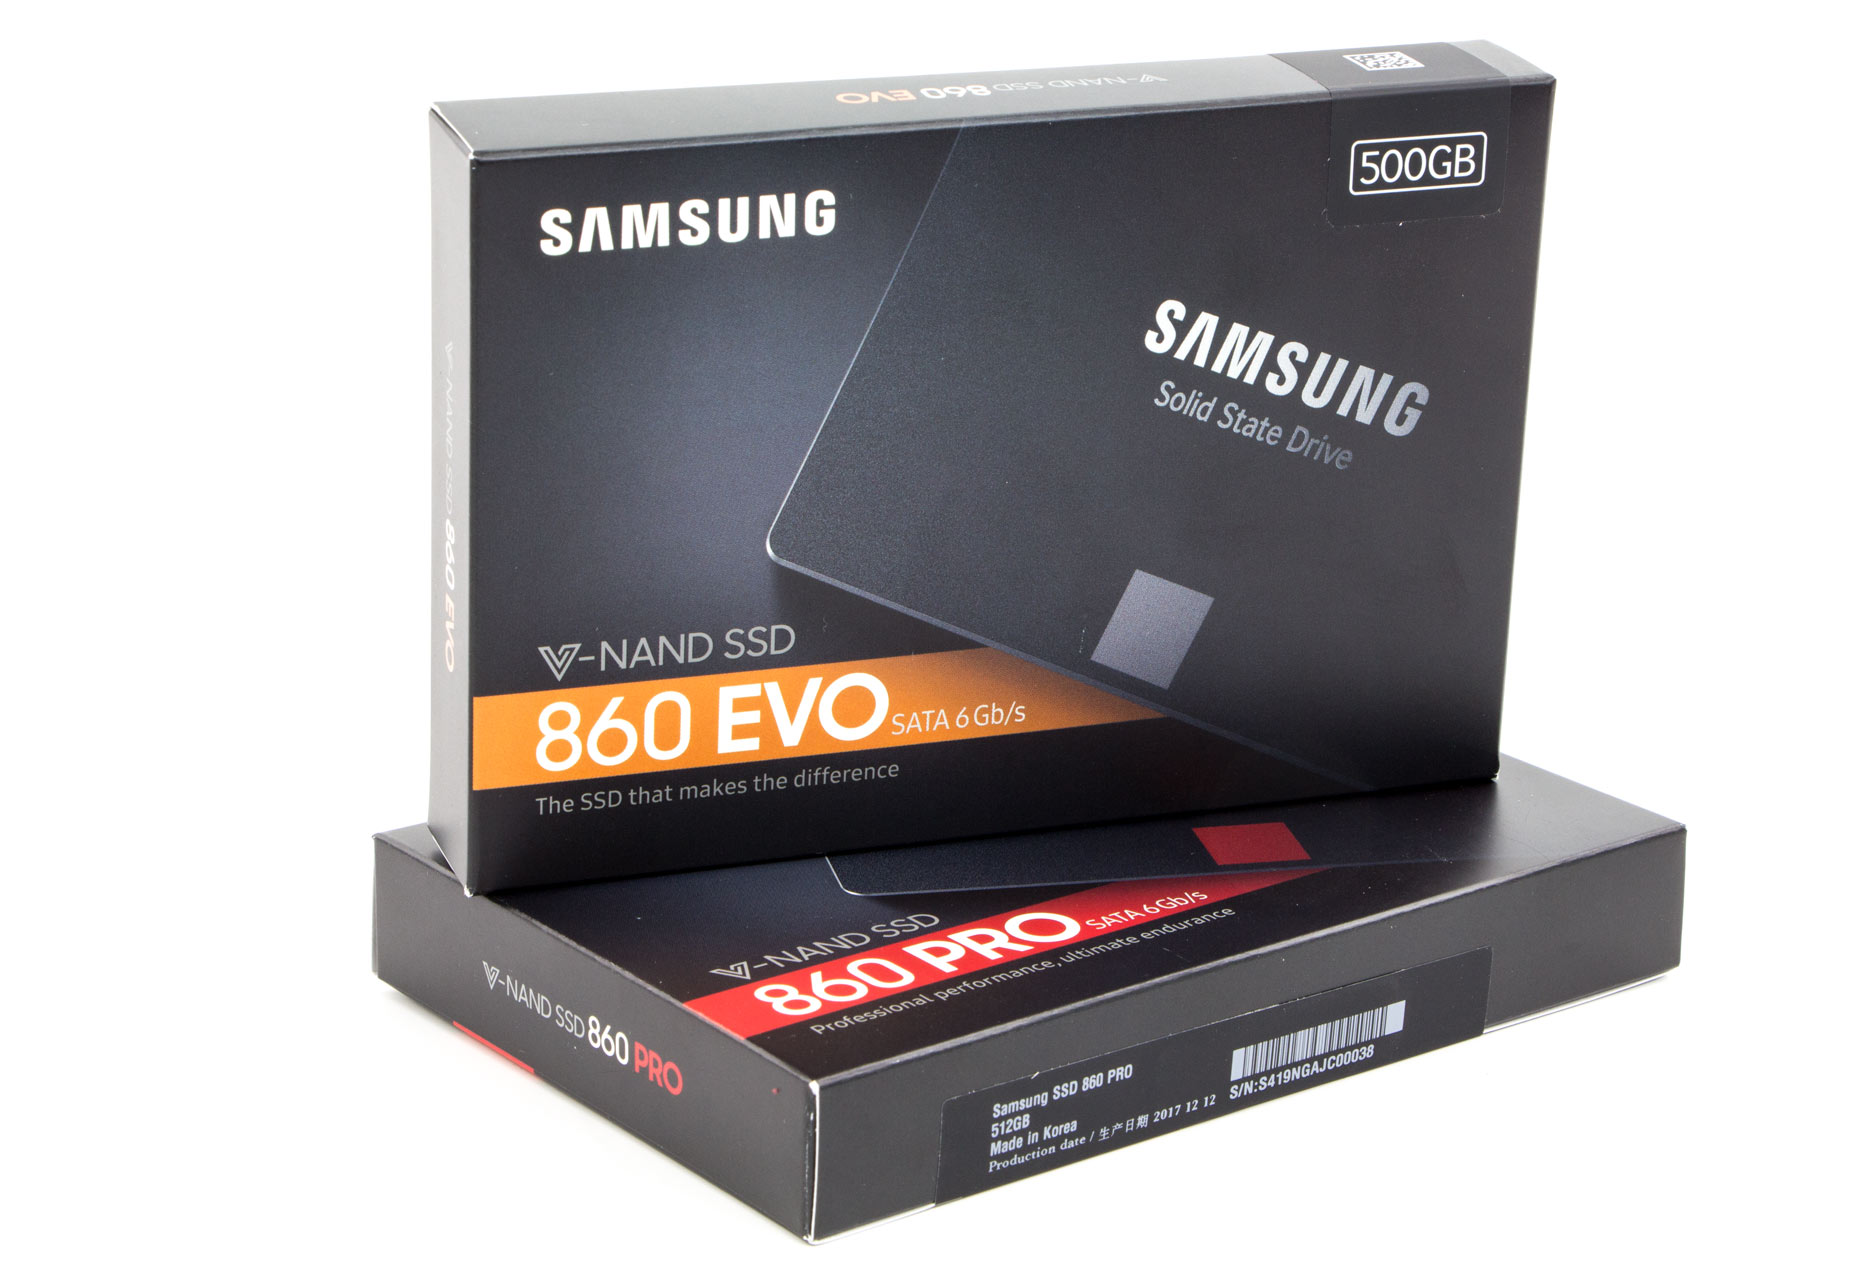 Samsung ssd 860 evo купить. Samsung EVO 860 Pro. SSD Samsung 860 EVO Pro. SSD Samsung 860 EVO 512gb. Samsung SSD 860 Pro 512gb.